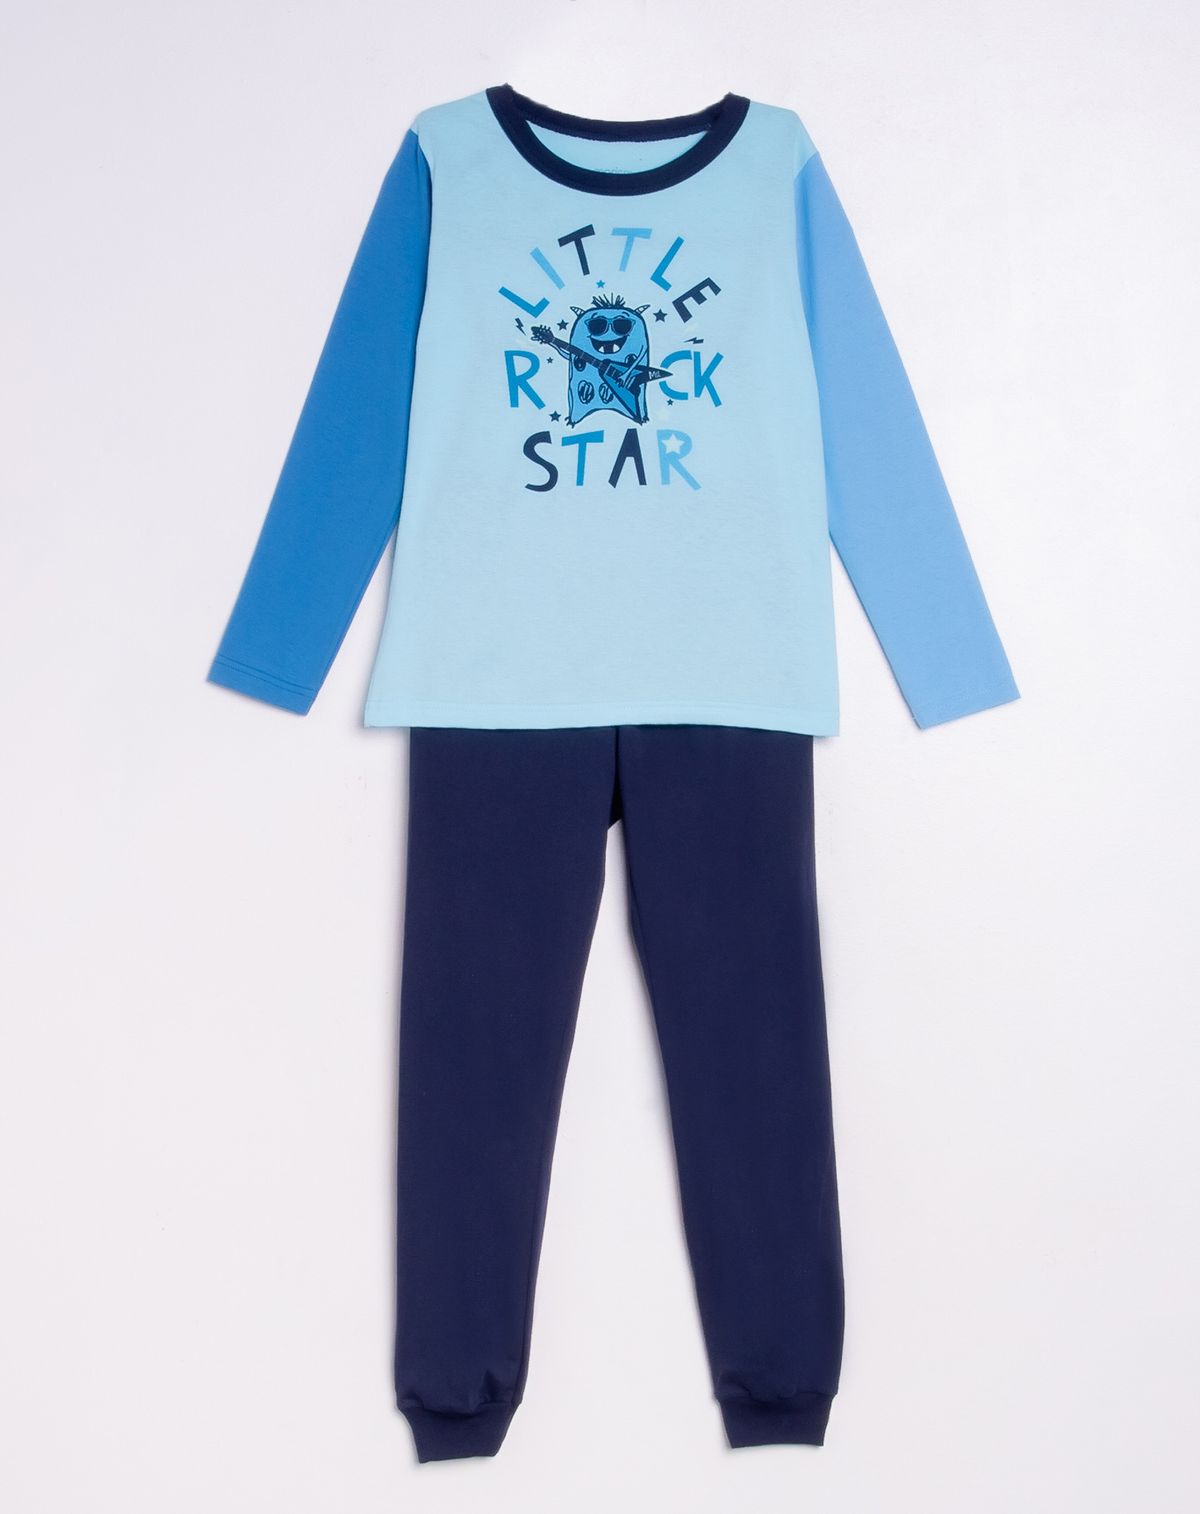 627409002-pijama-longo-infantil-menino-brilha-no-escuro-marisol-azul-6-1da